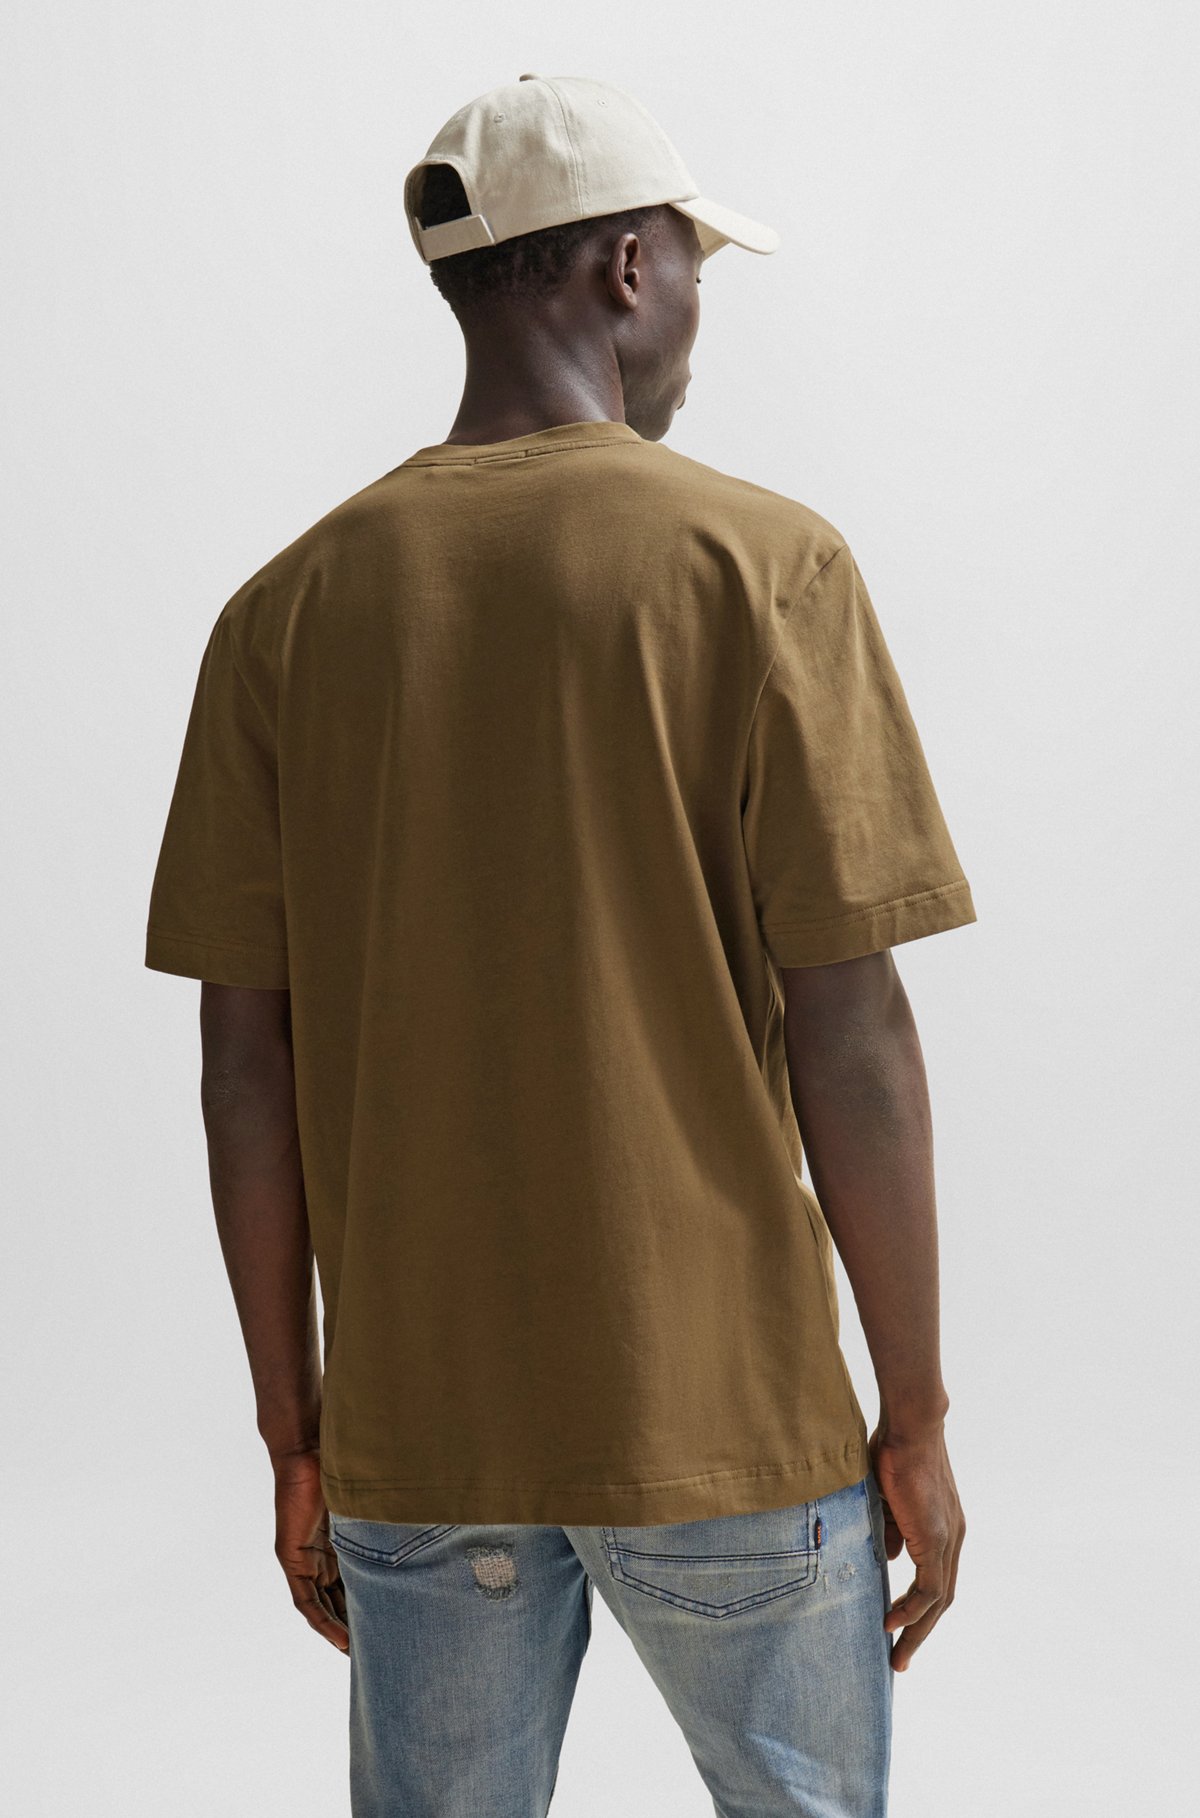 Camiseta relaxed fit de algodón elástico con logo estampado, Verde oscuro